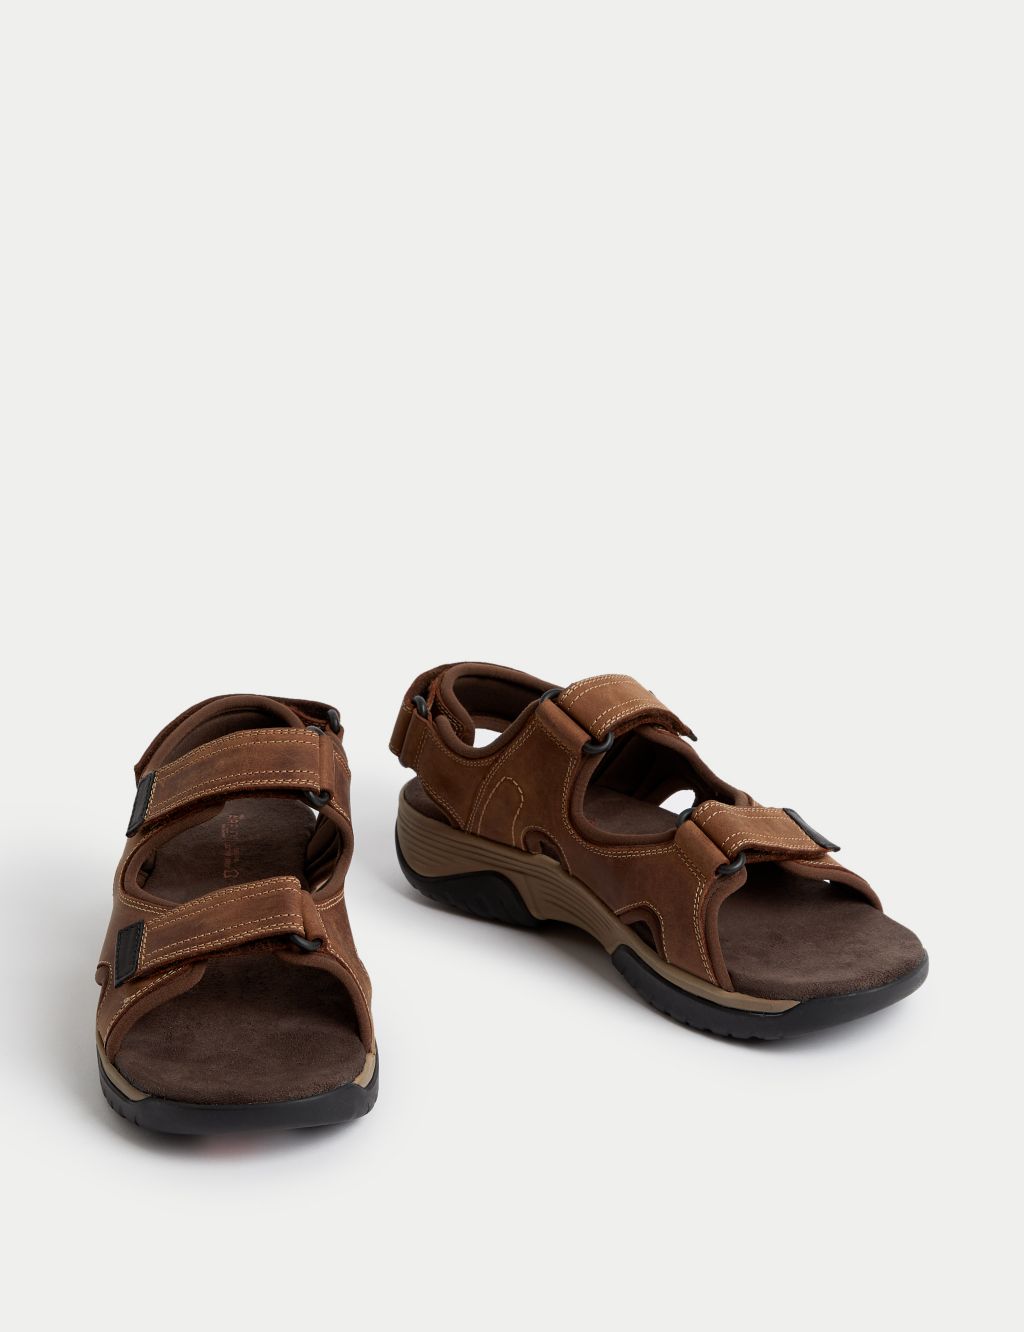 Airflex™ Nubuck Leather Riptape Sandals image 2